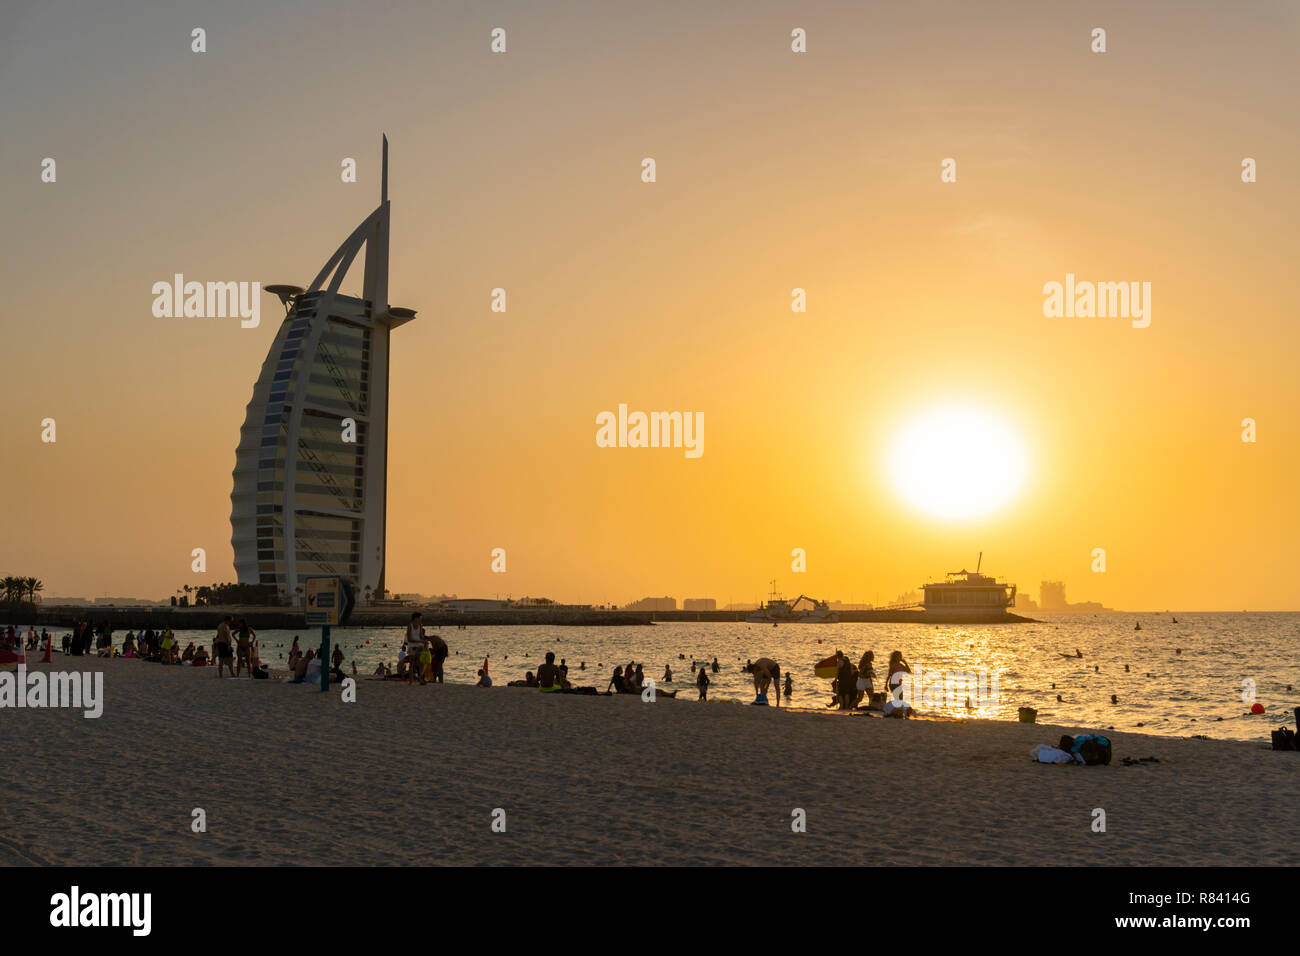 View of Burj Al Arab at sunset Stock Photo